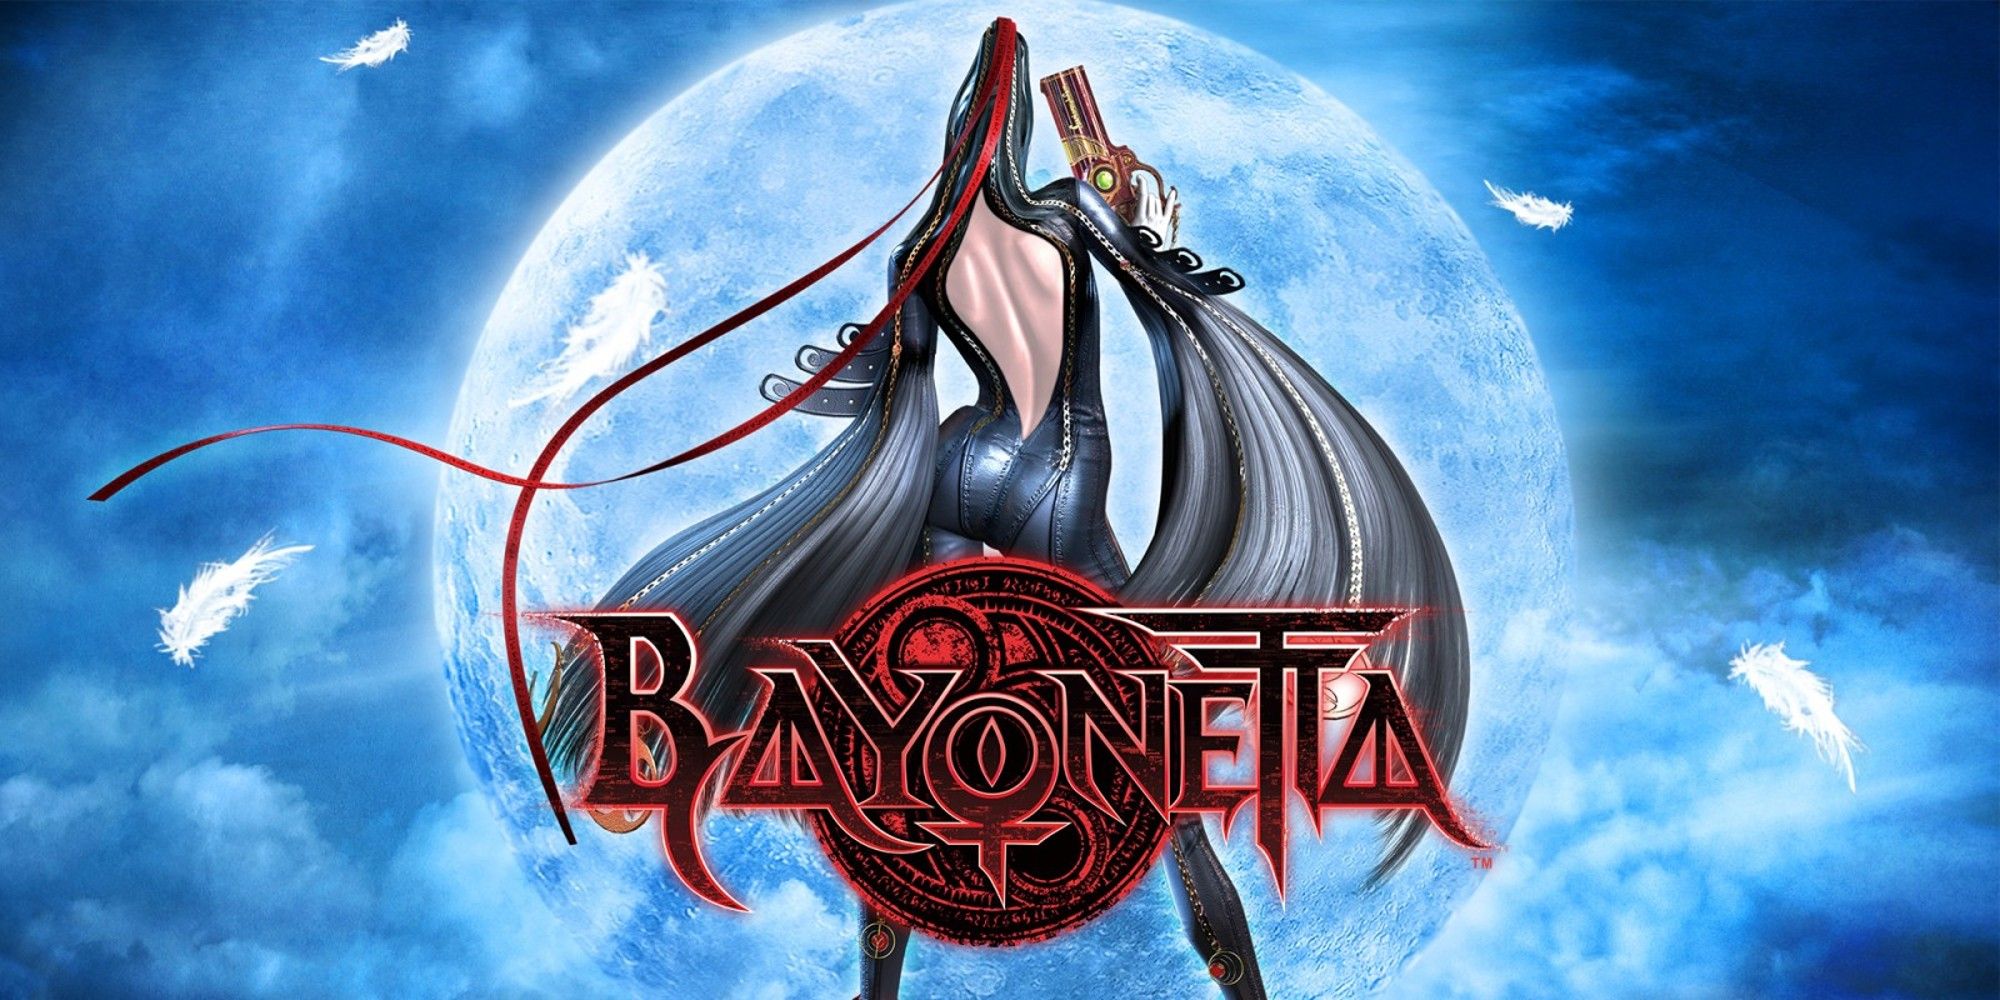 How Long It Take Finish Bayonetta?